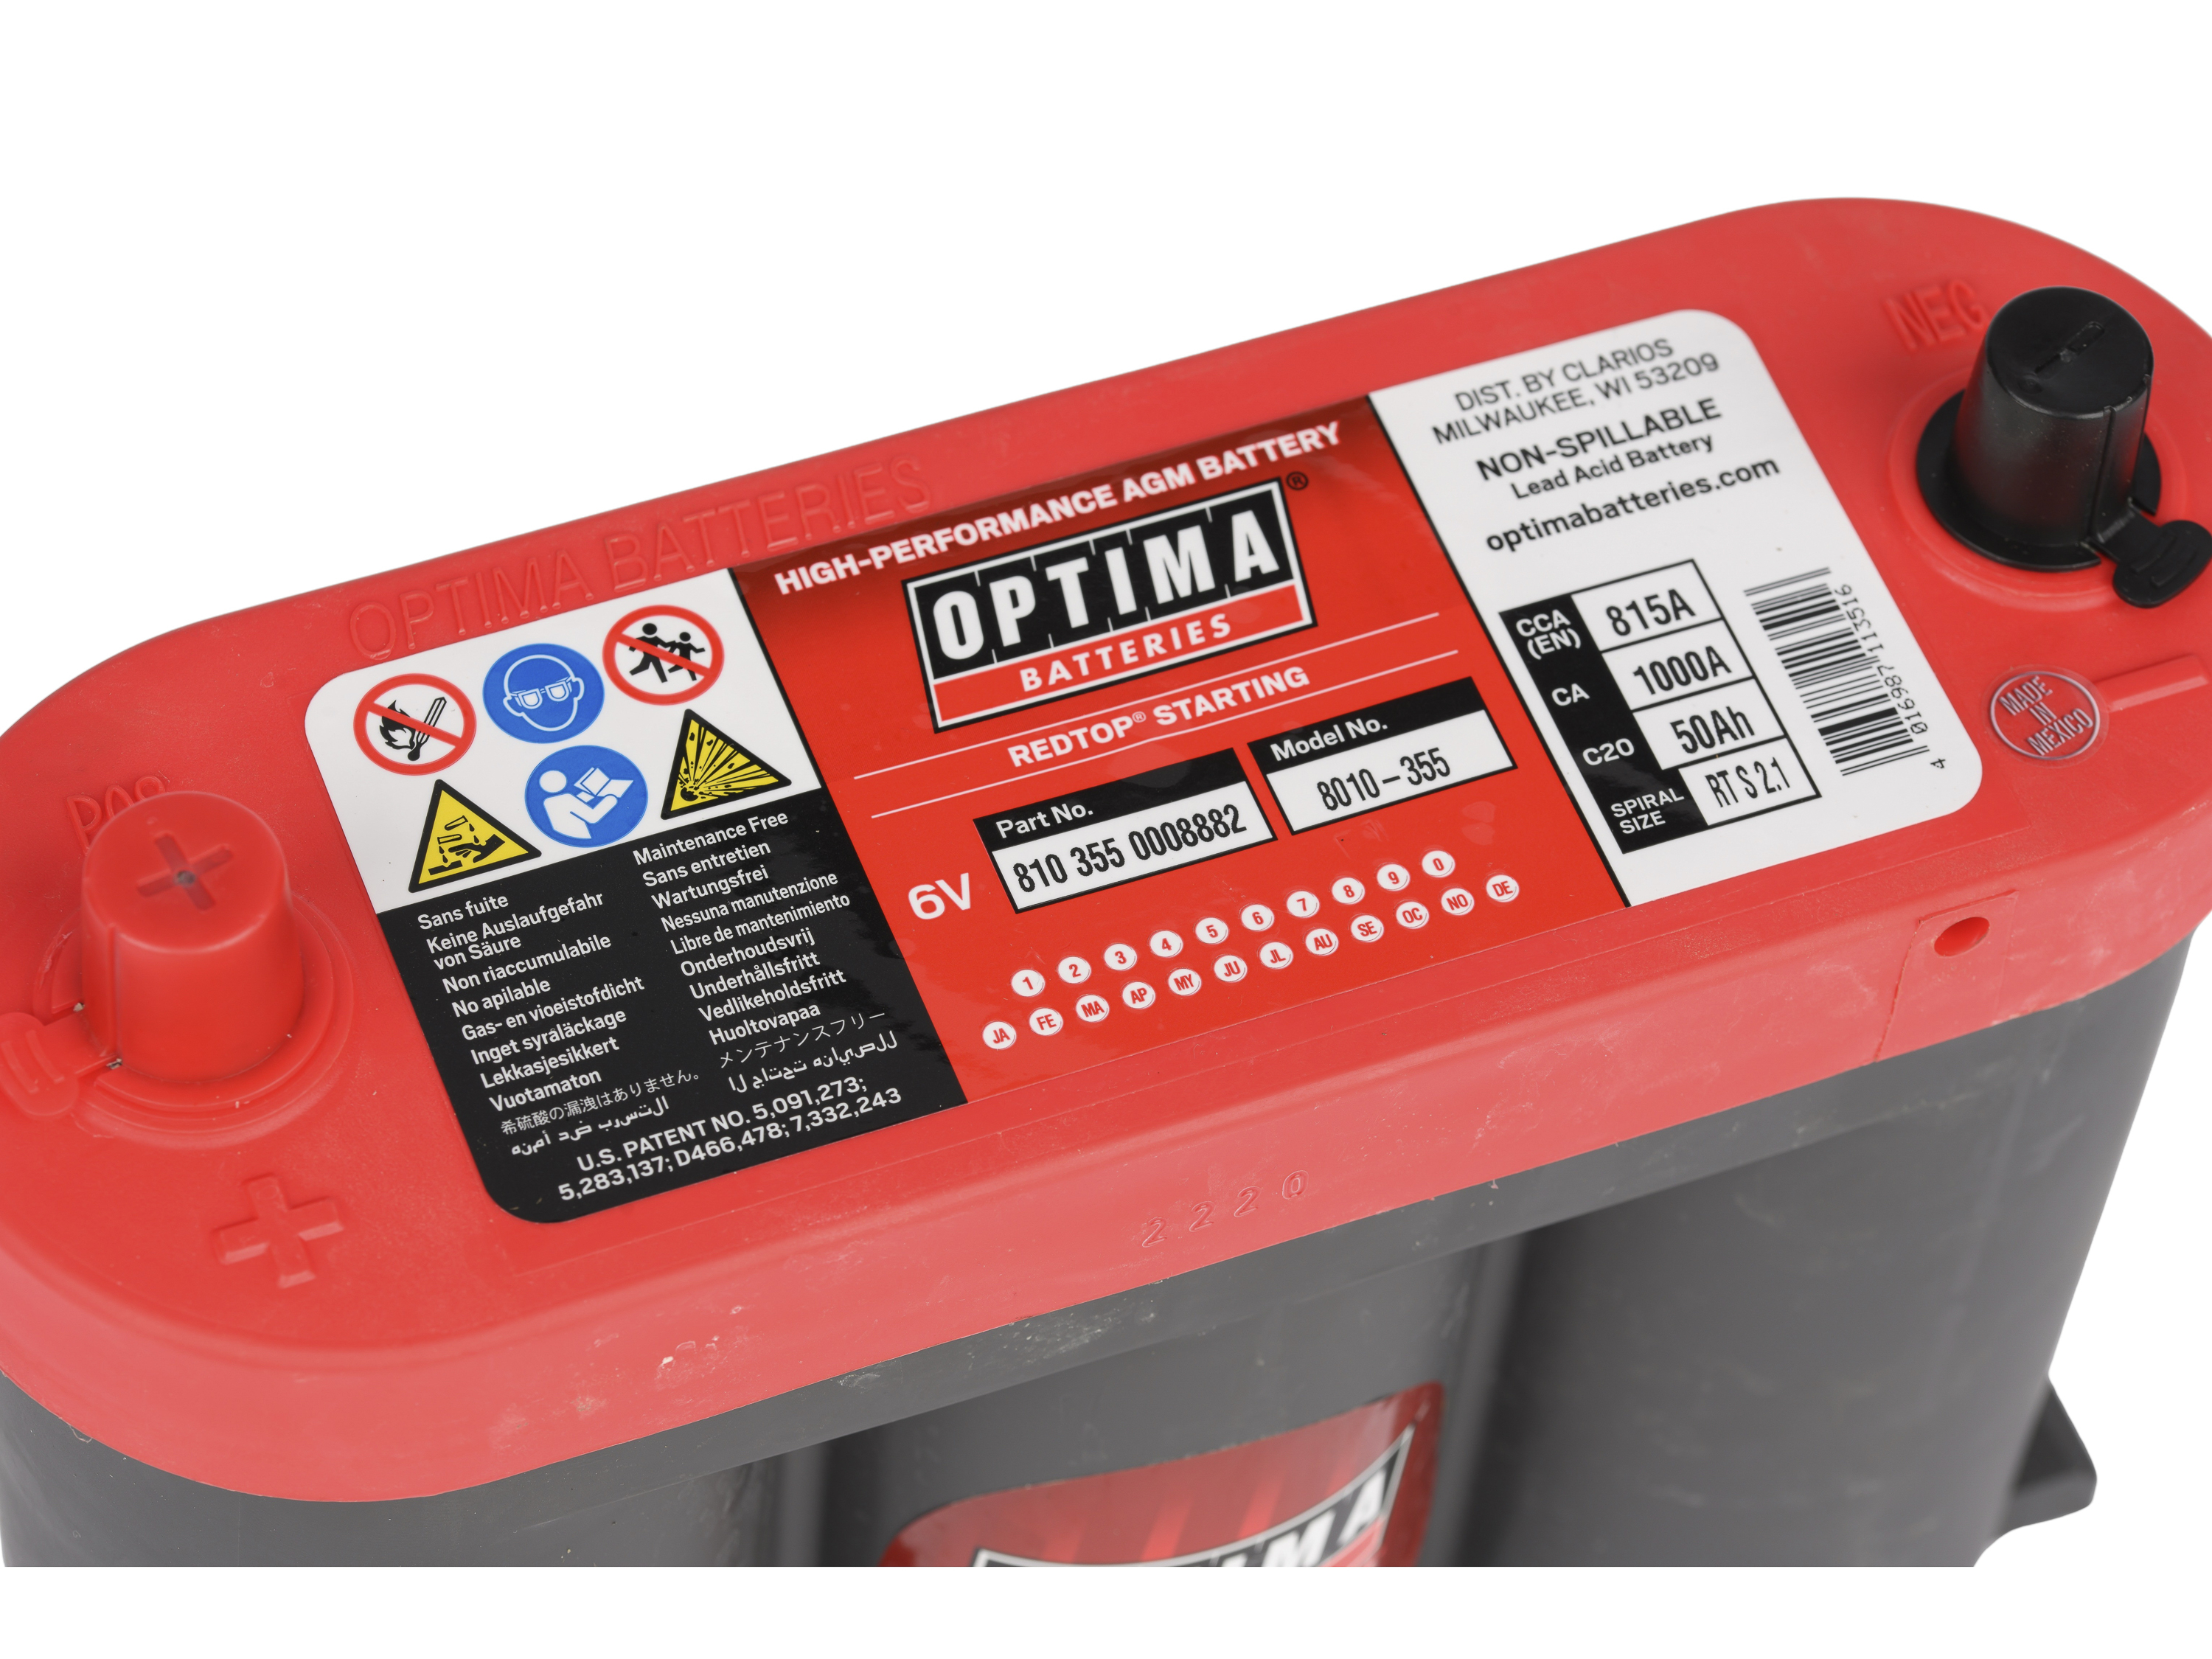 Optima Red Top S-2.1 (6V) 50Ah 815CCA Battery - 810355000